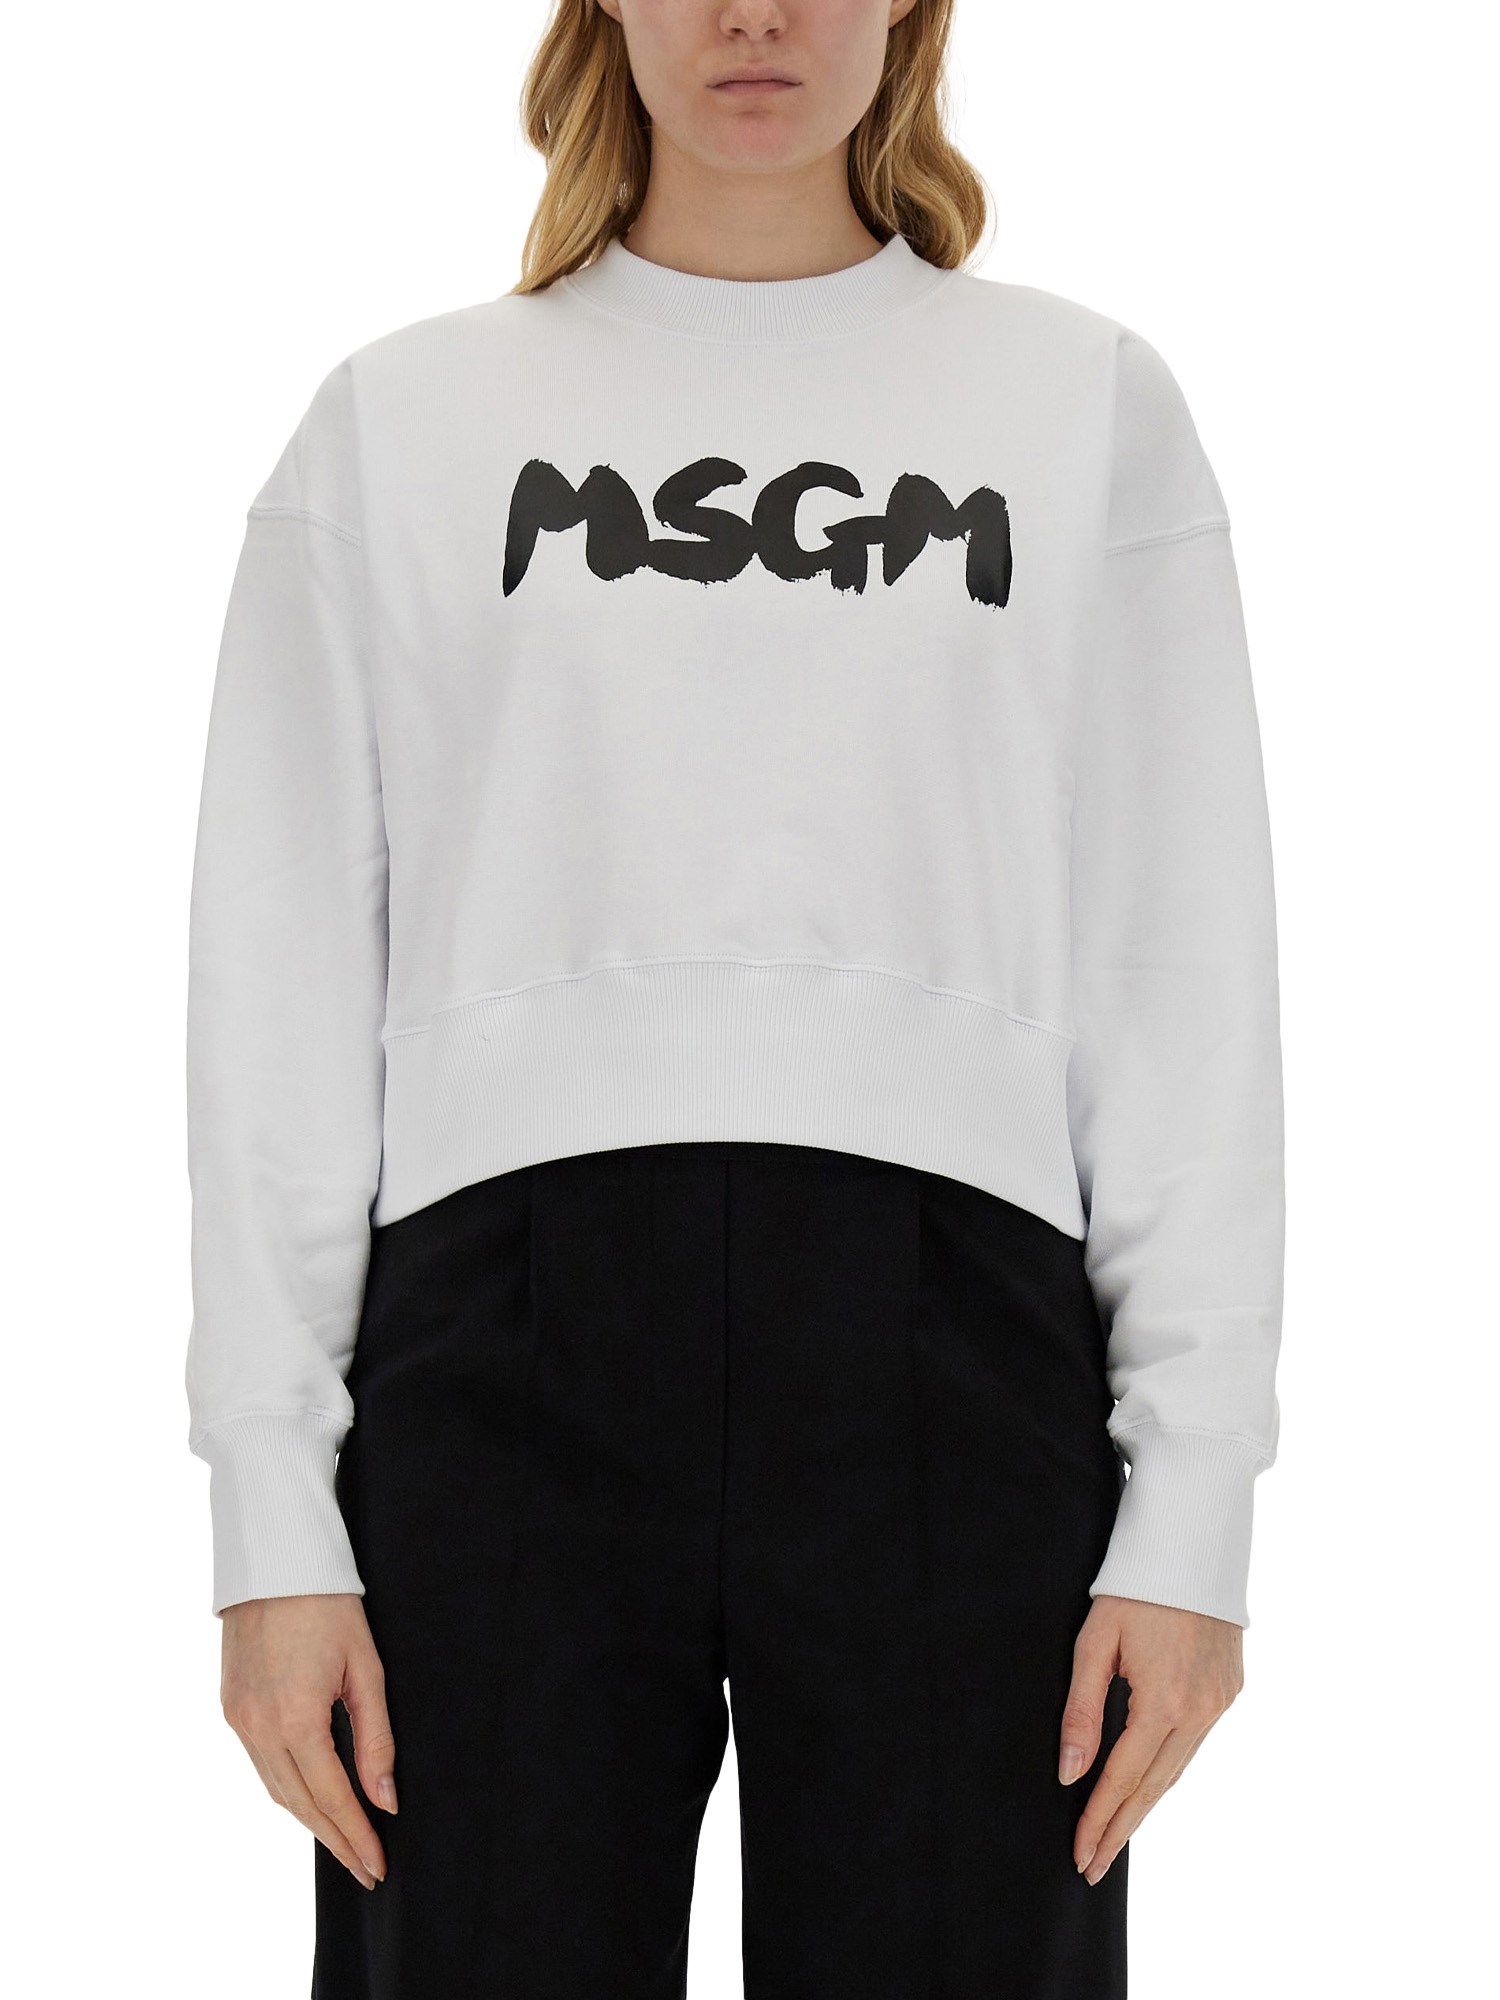 msgm sweatshirt with logo